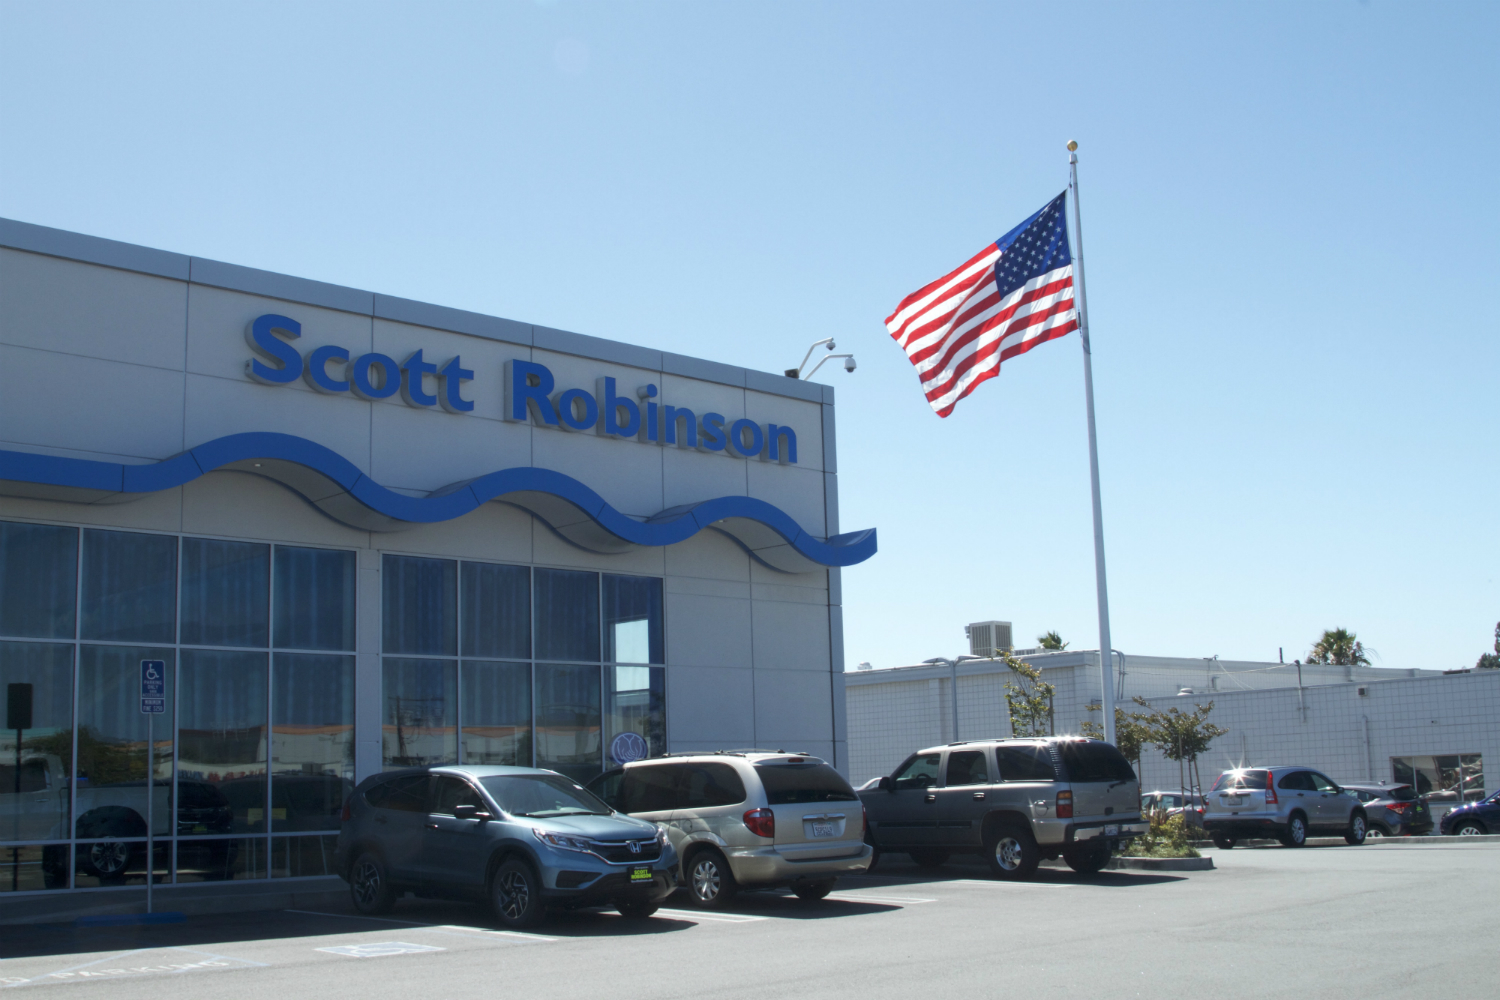 Scott Robinson Insurance: Allstate Insurance | 20340 Hawthorne Blvd, Ste A, Torrance, CA, 90503 | +1 (310) 371-4471